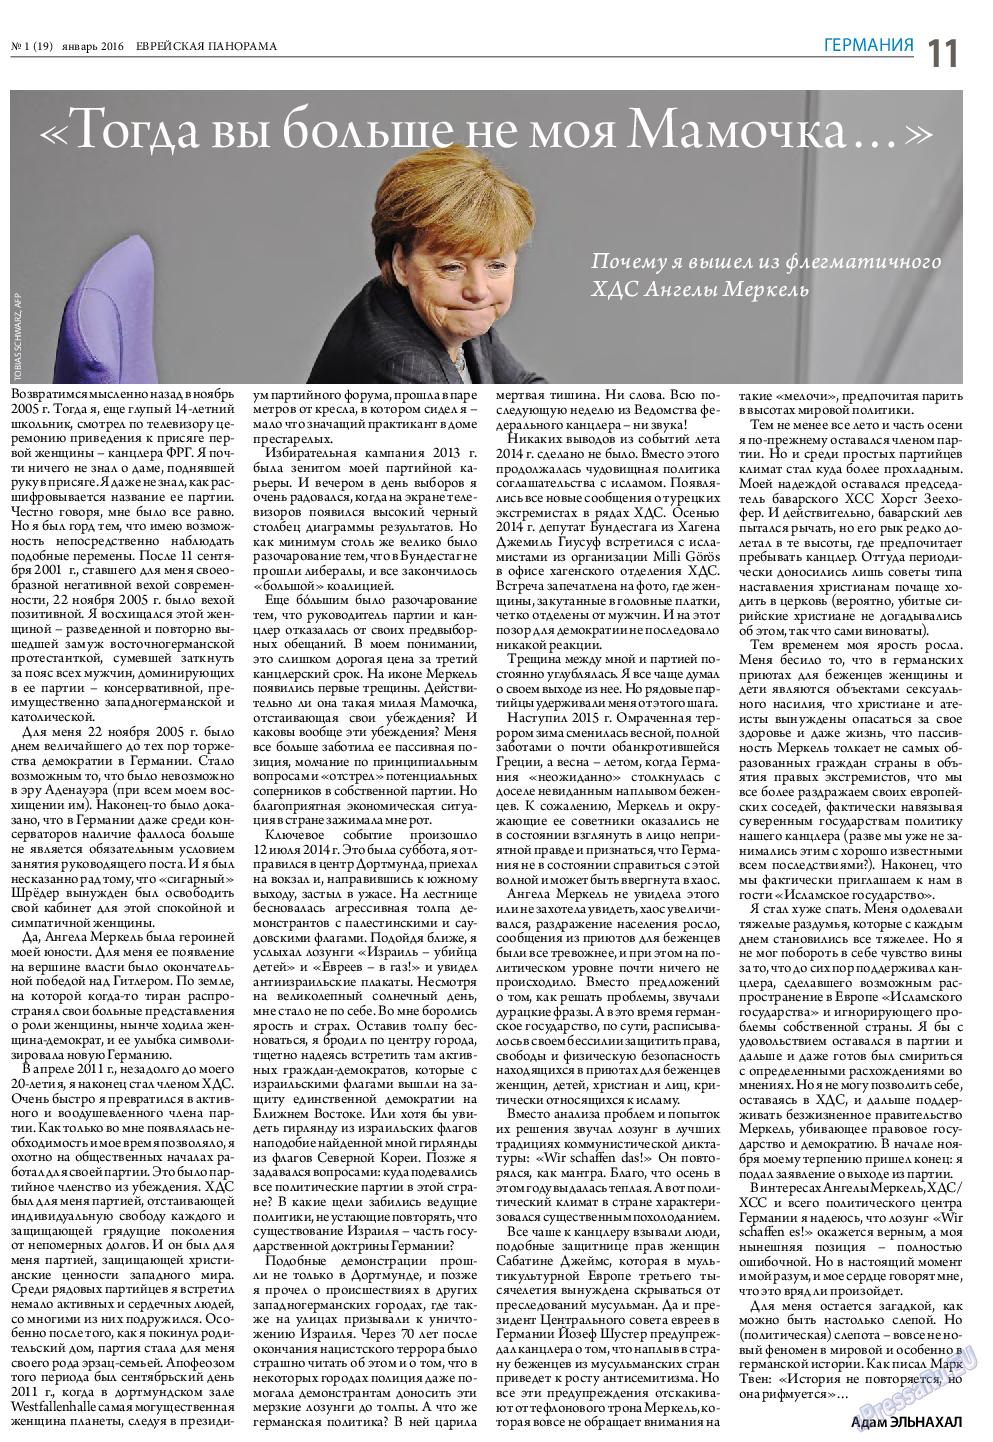 Еврейская панорама, газета. 2016 №1 стр.11